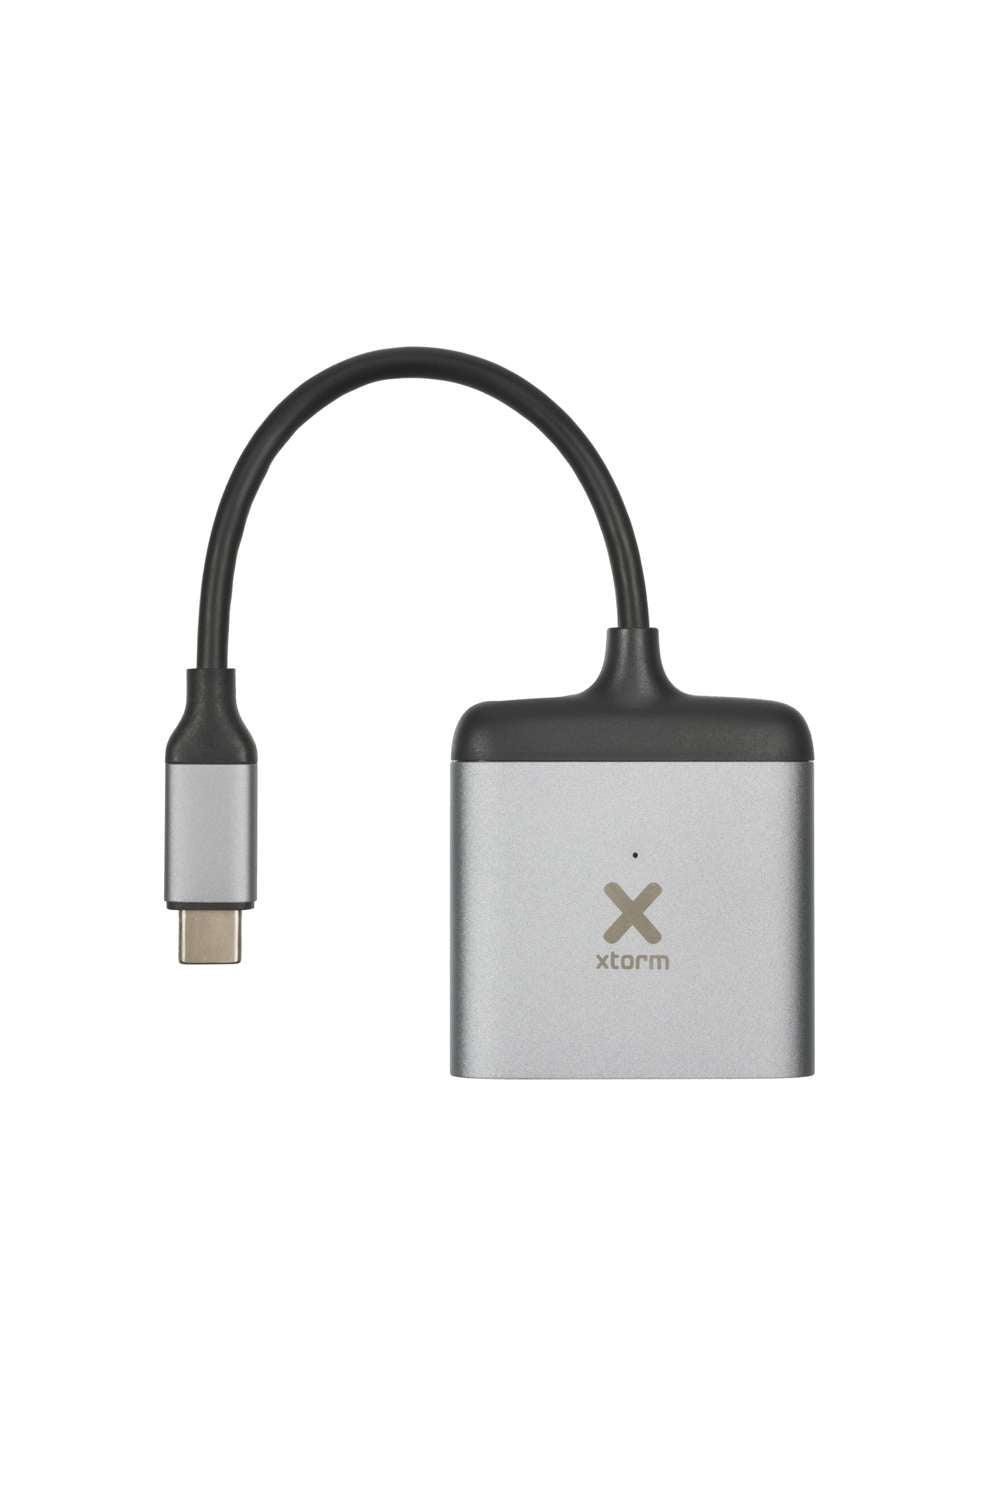 Xtorm Xtorm XC202 Connect USB-C naar 2x HDMI Hub - Space Grey